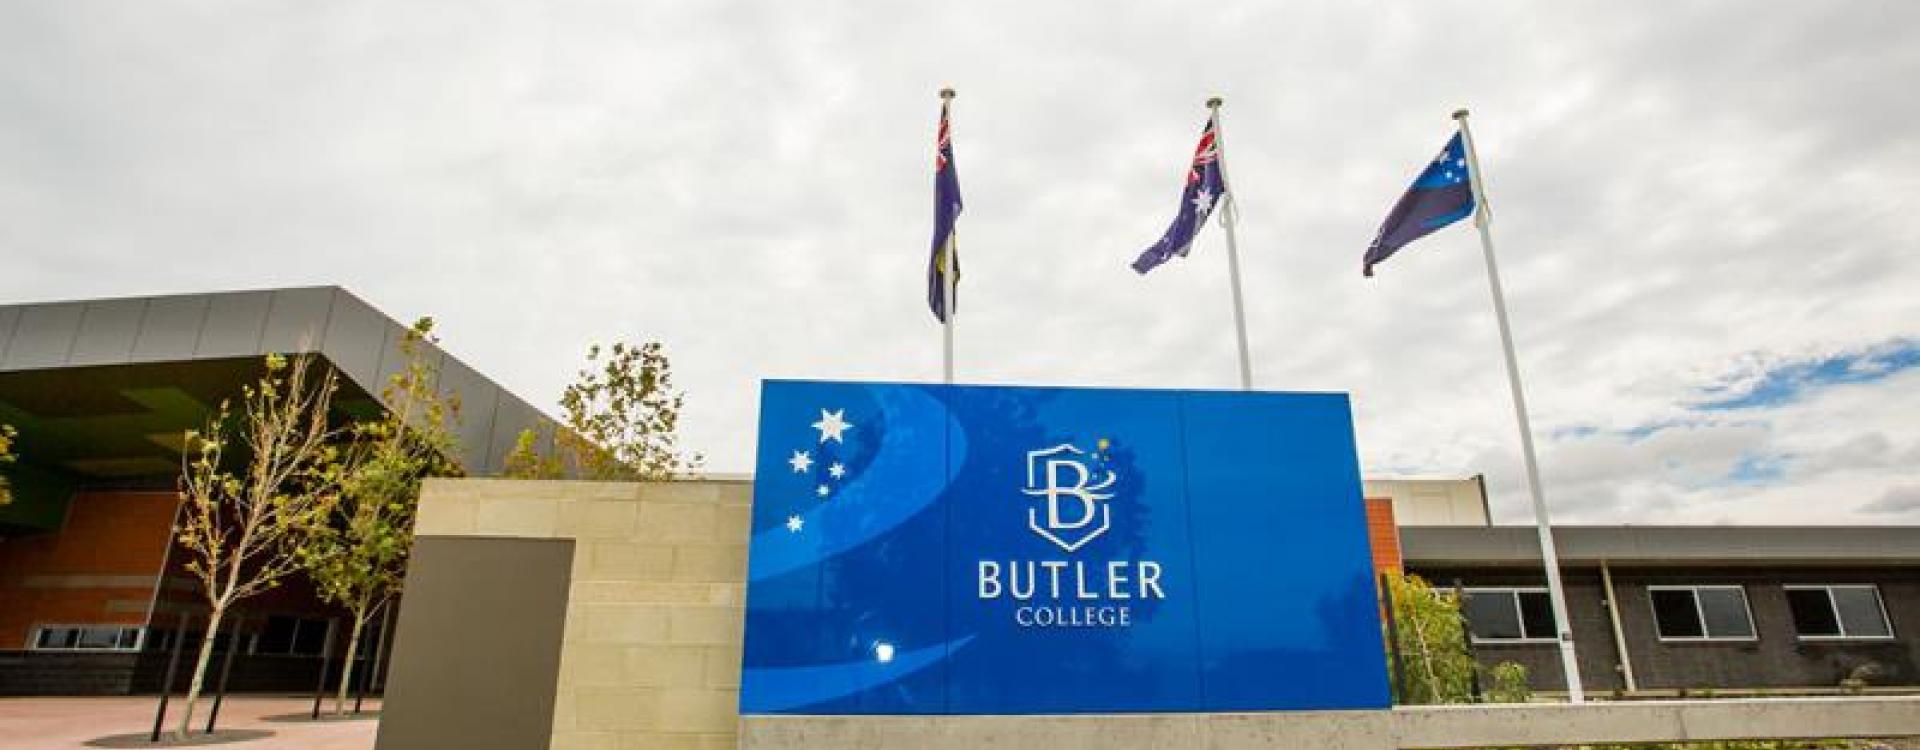 Butler College